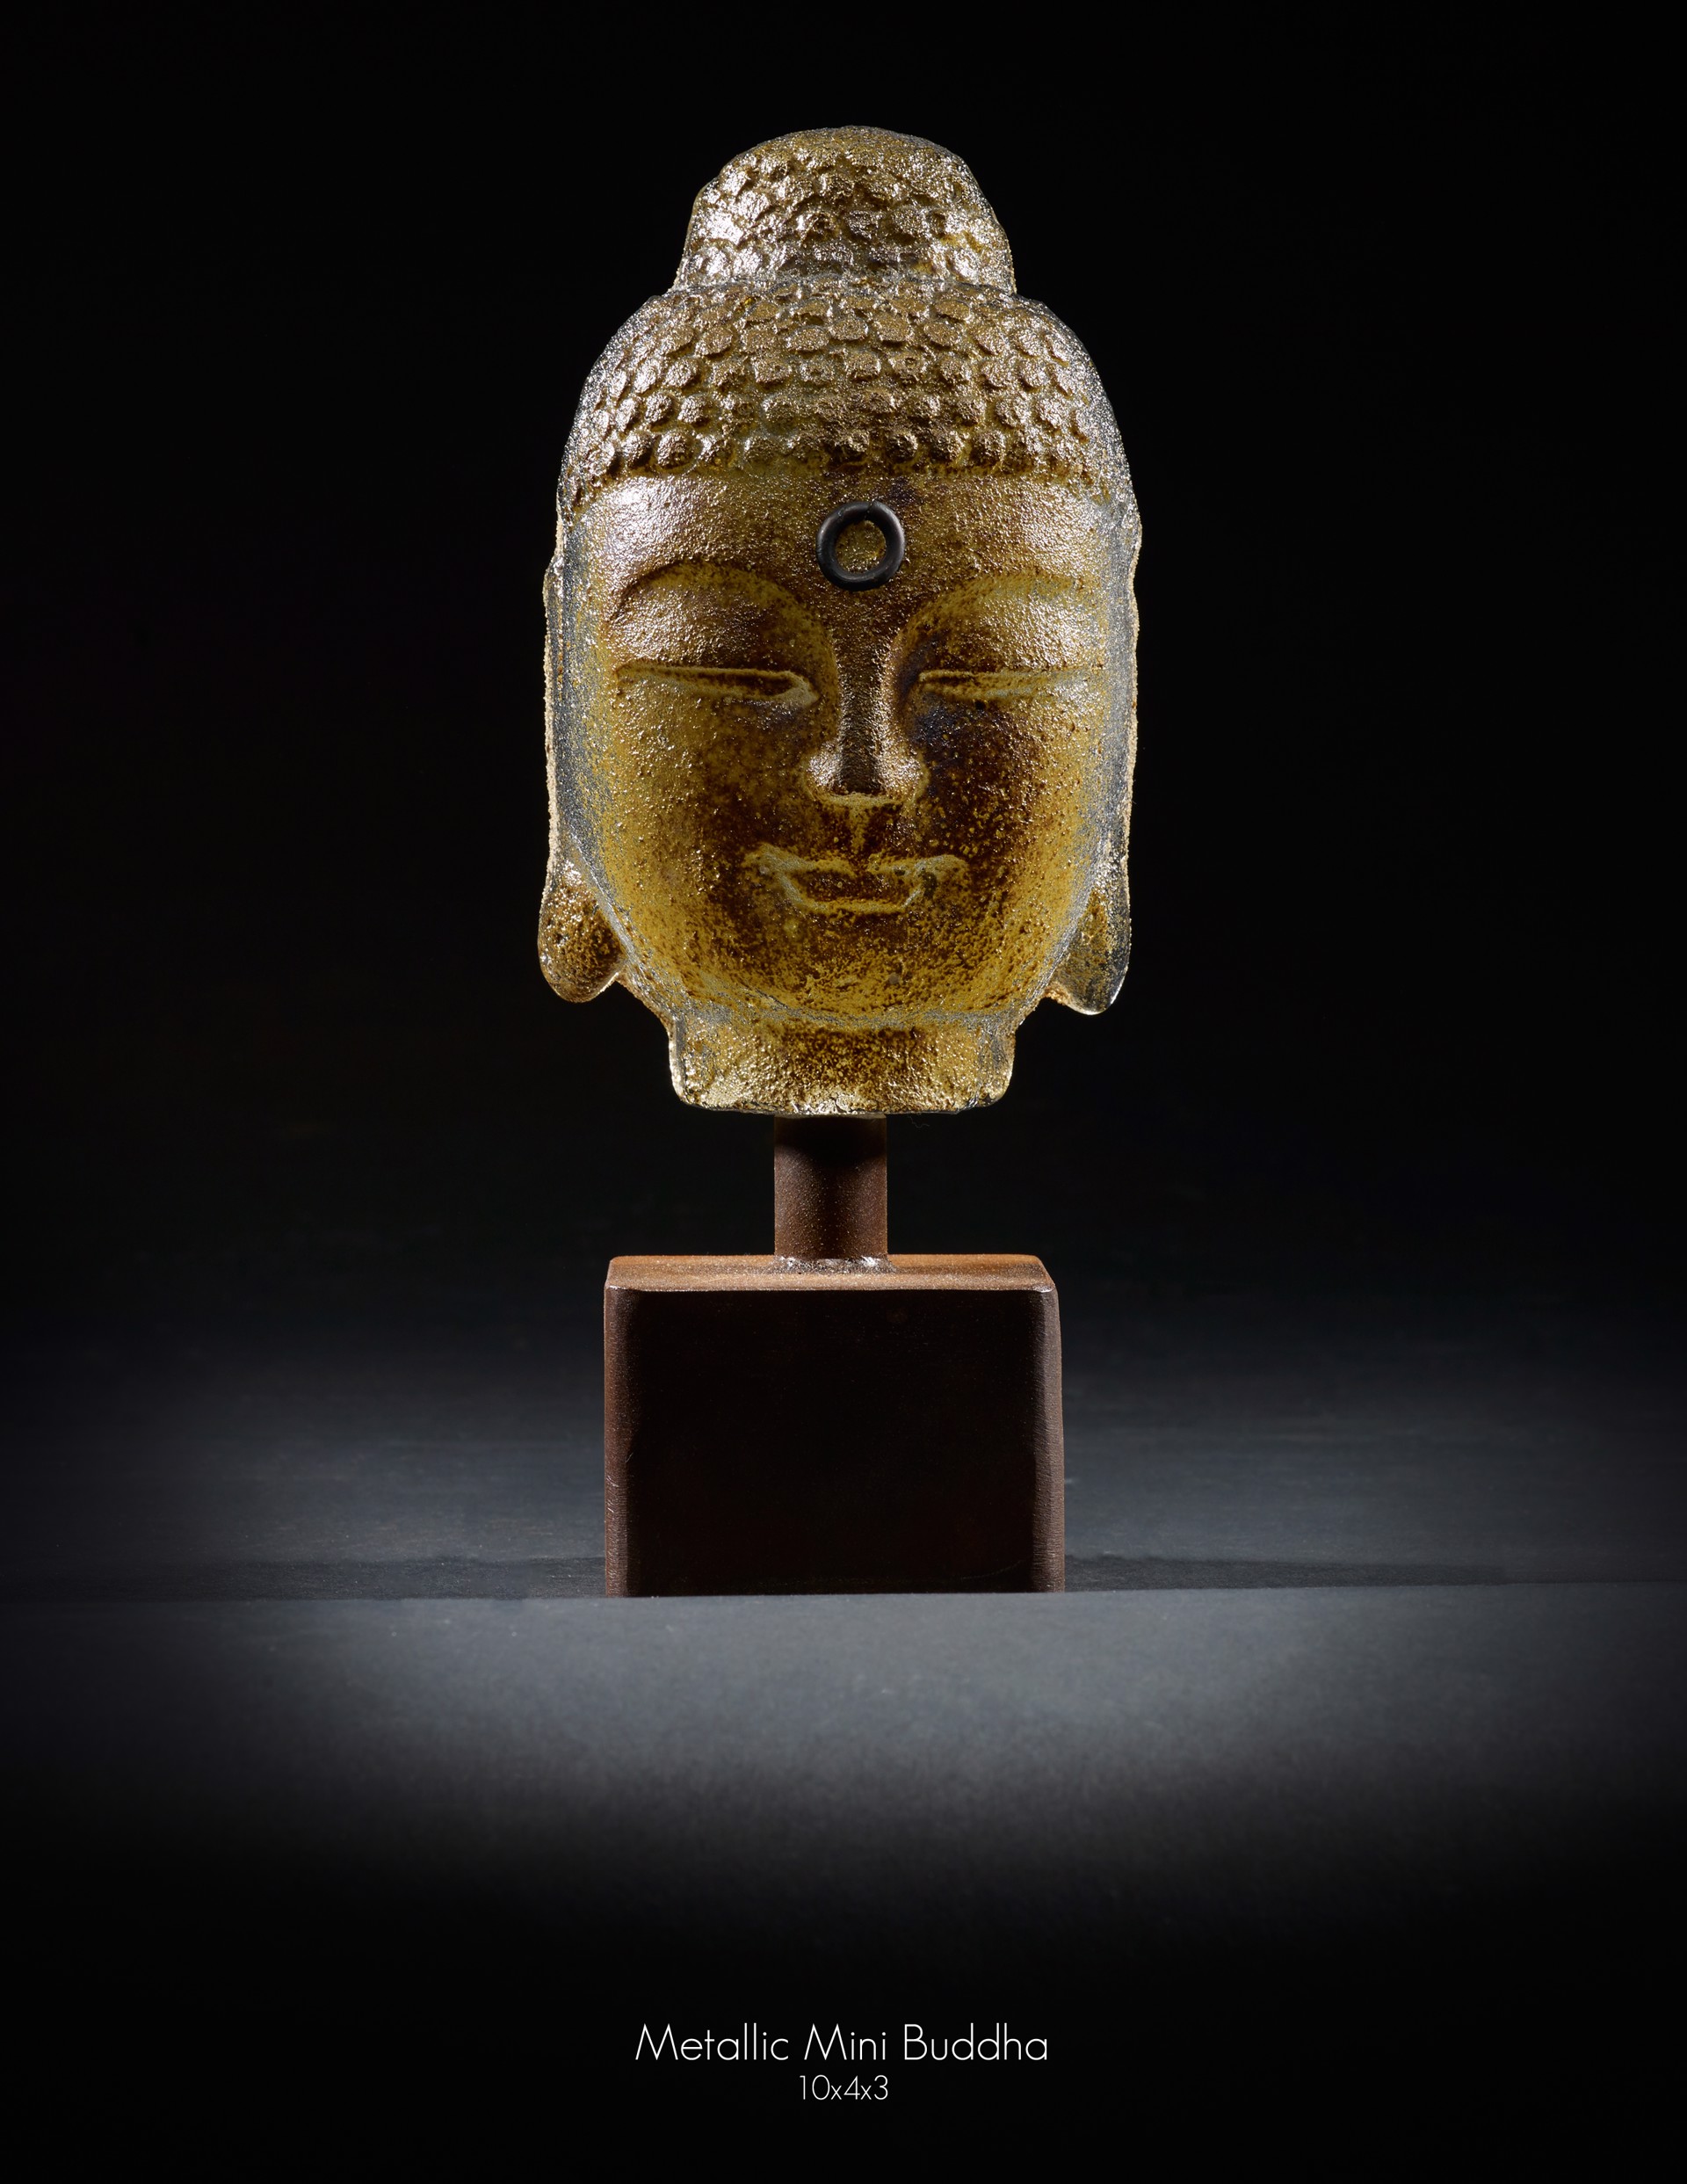 Mini Buddha Metallic by Marlene Rose (b. 1967)